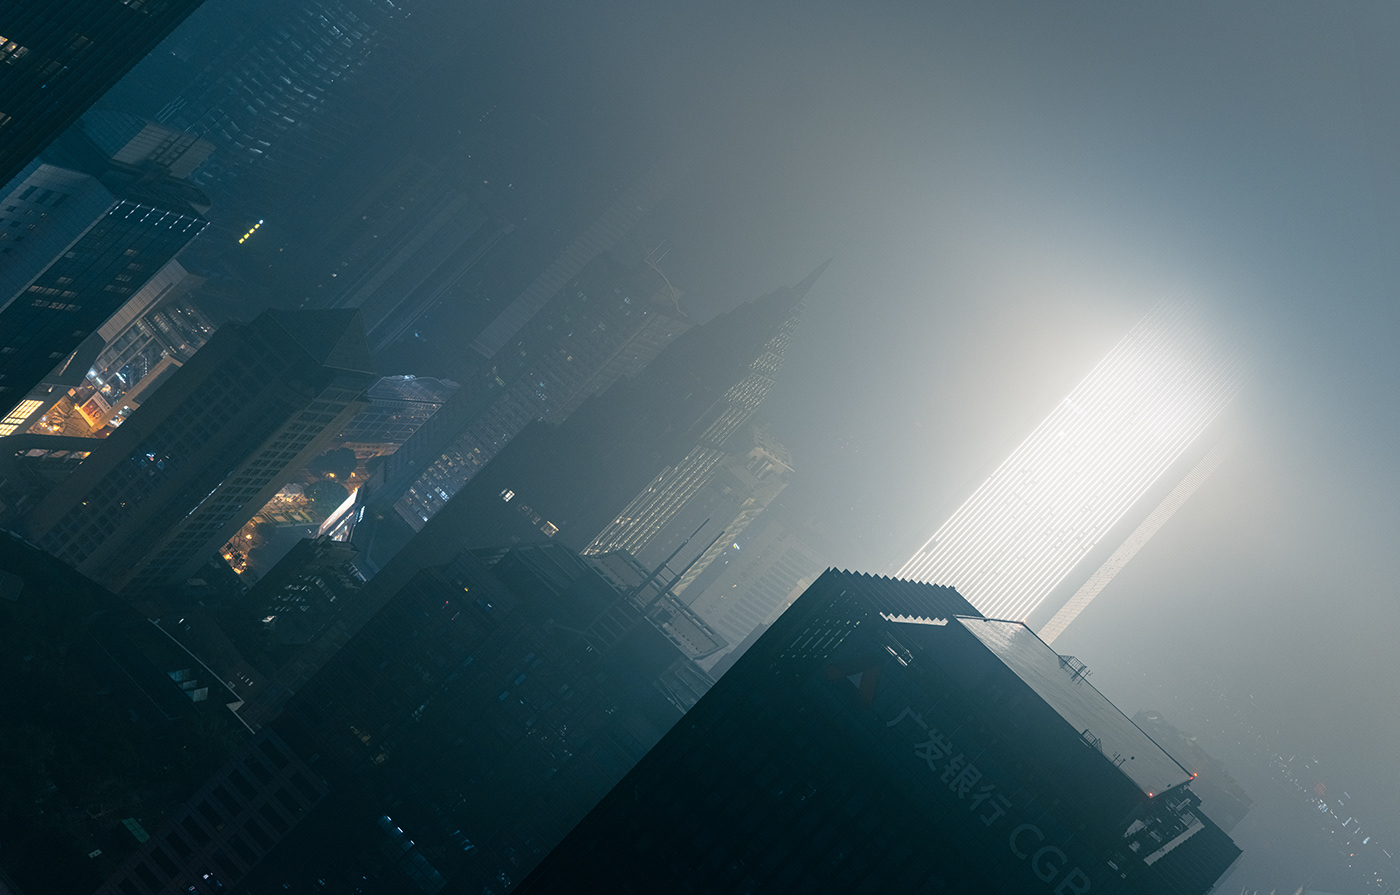 city night skyscraper Cyberpunk fog volume light dark cold Landscape Photography 